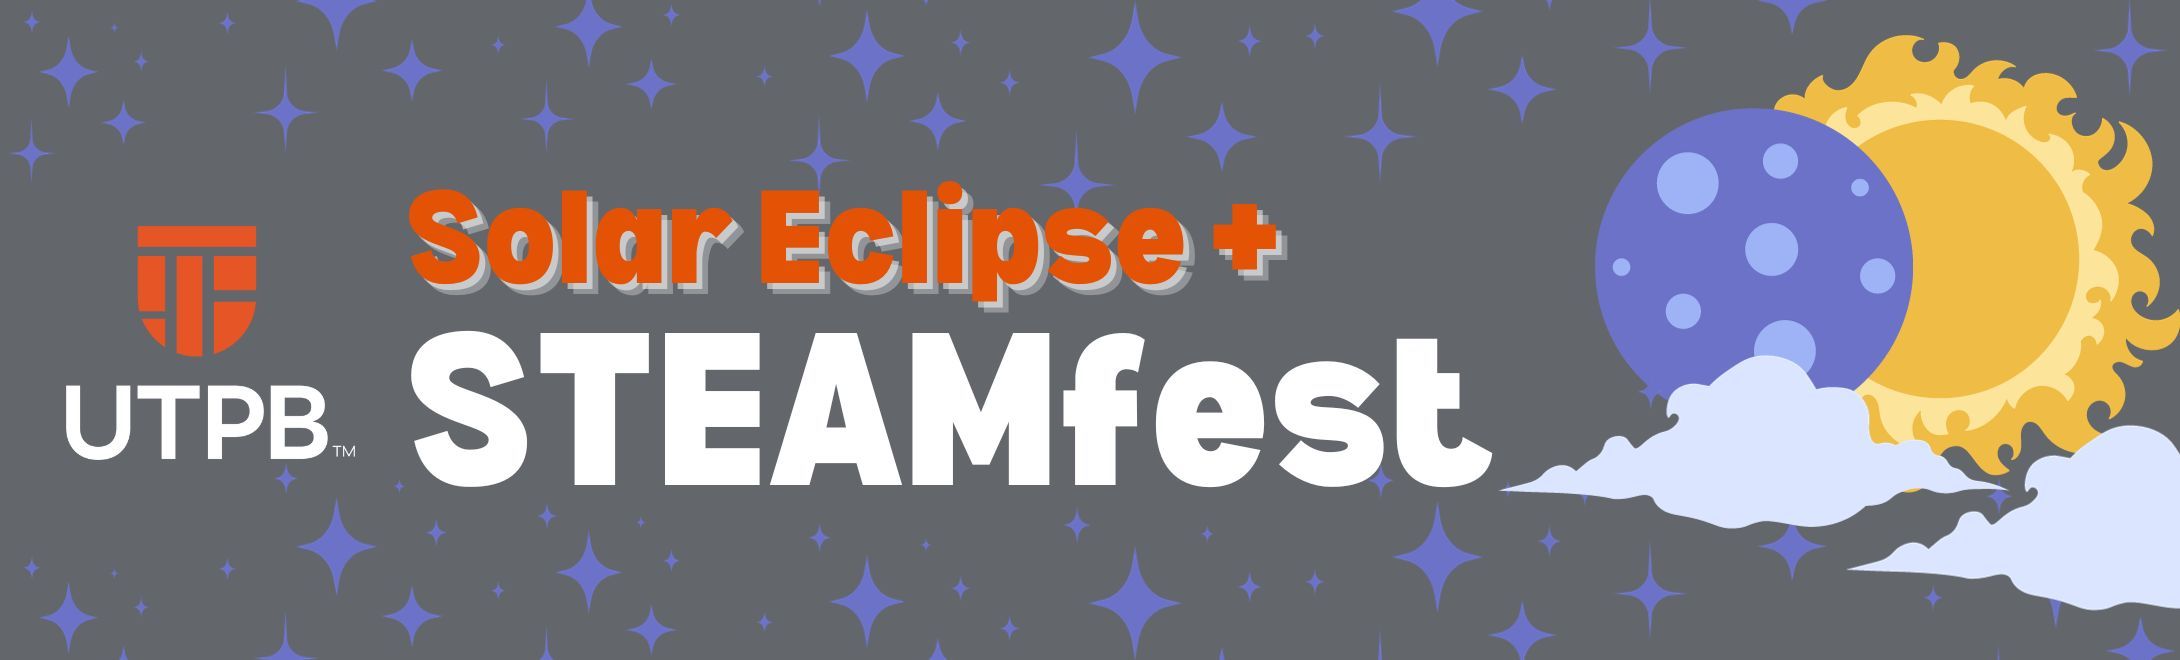 banner del logotipo del eclipse solar y steamfest